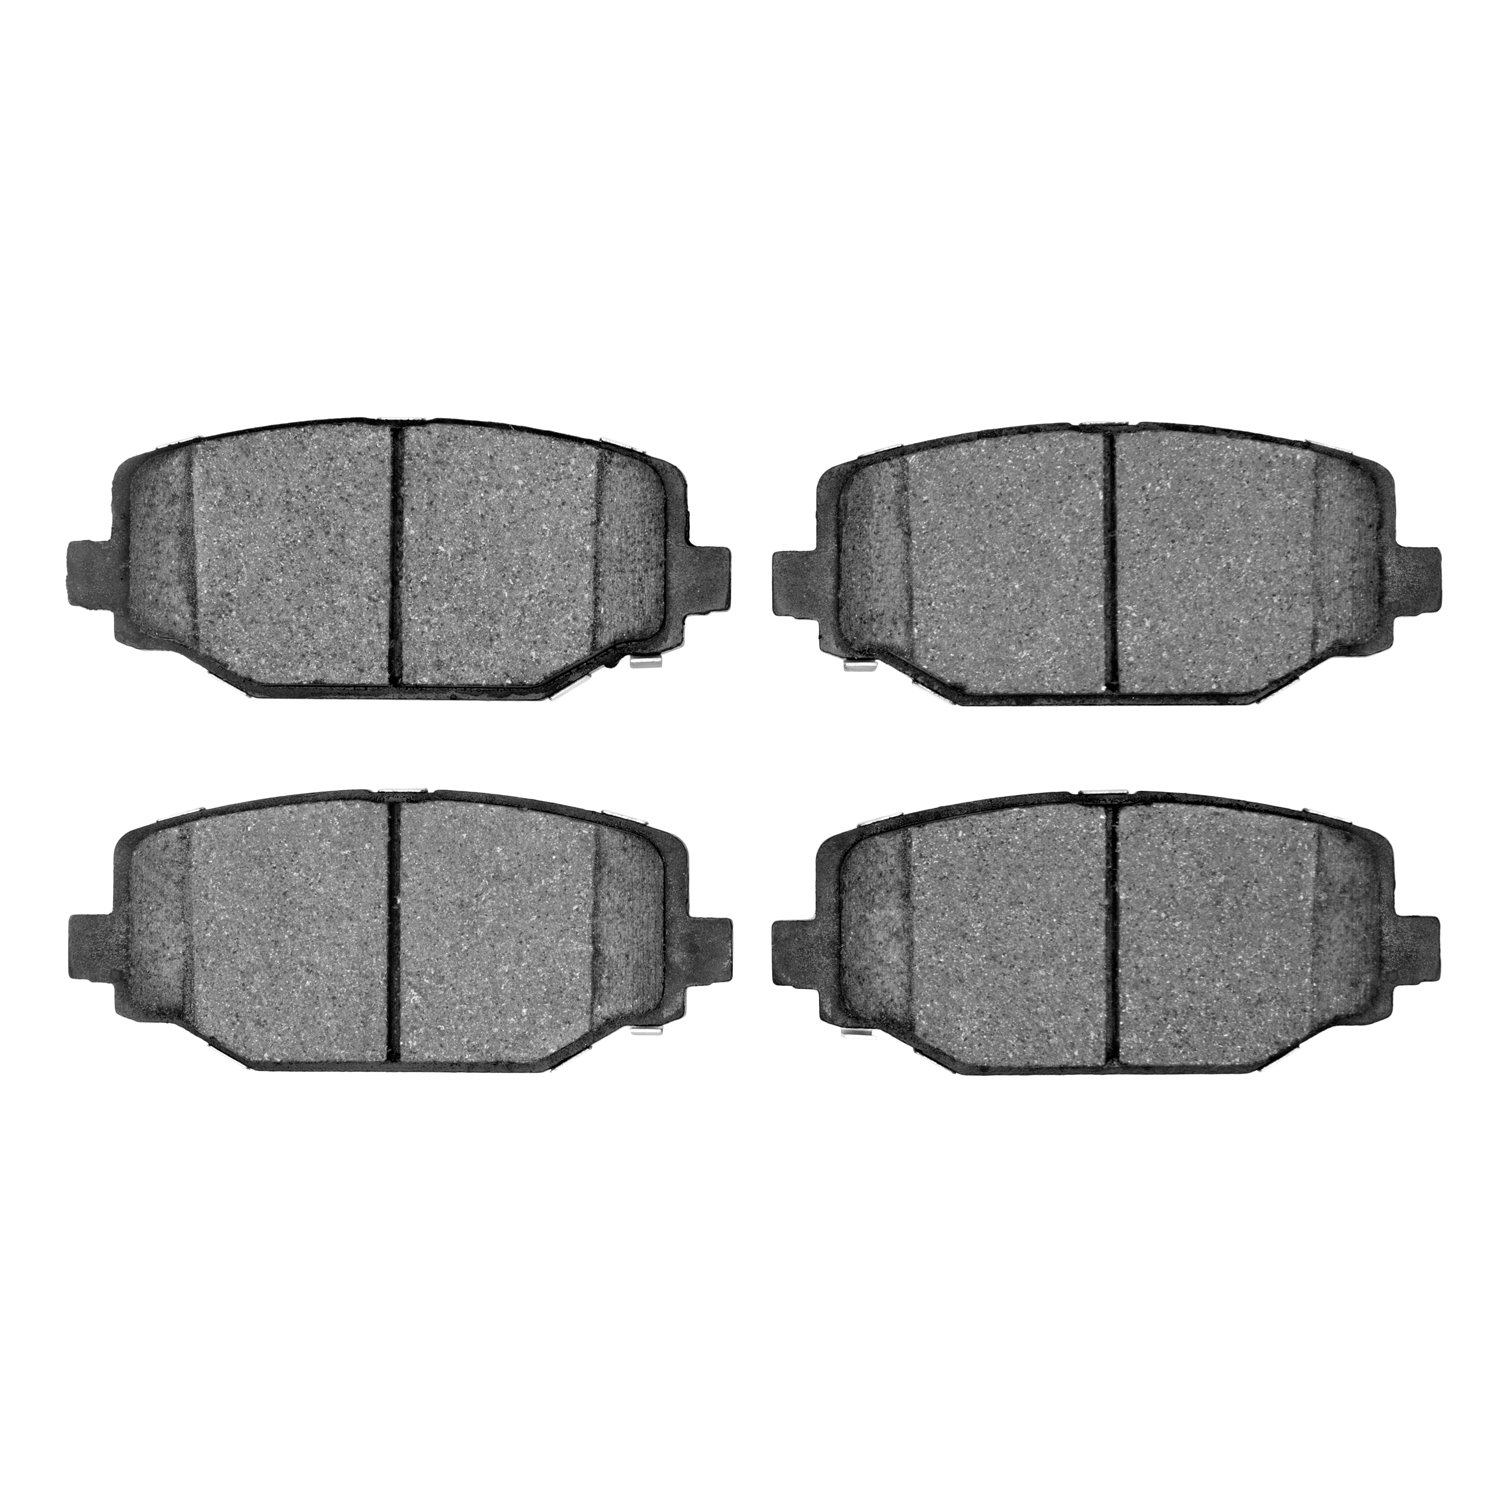 Ceramic Brake Pads, 2012-2020 Fits Multiple Makes/Models, Position: Rear